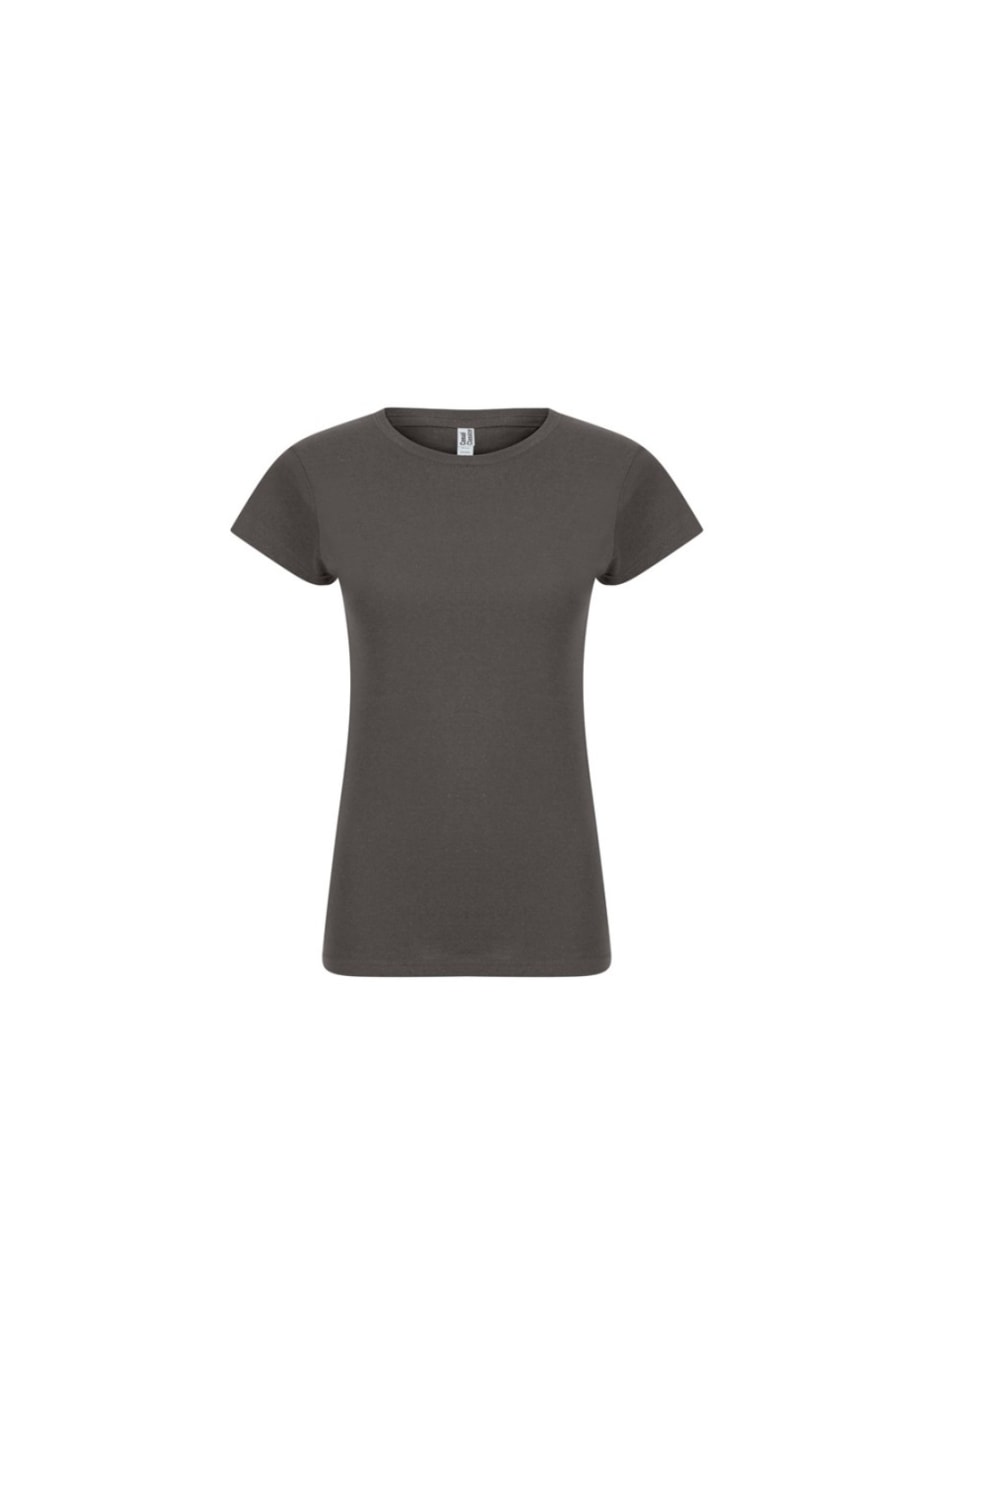 Casual Classic Womens/Ladies T-Shirt (Charcoal)